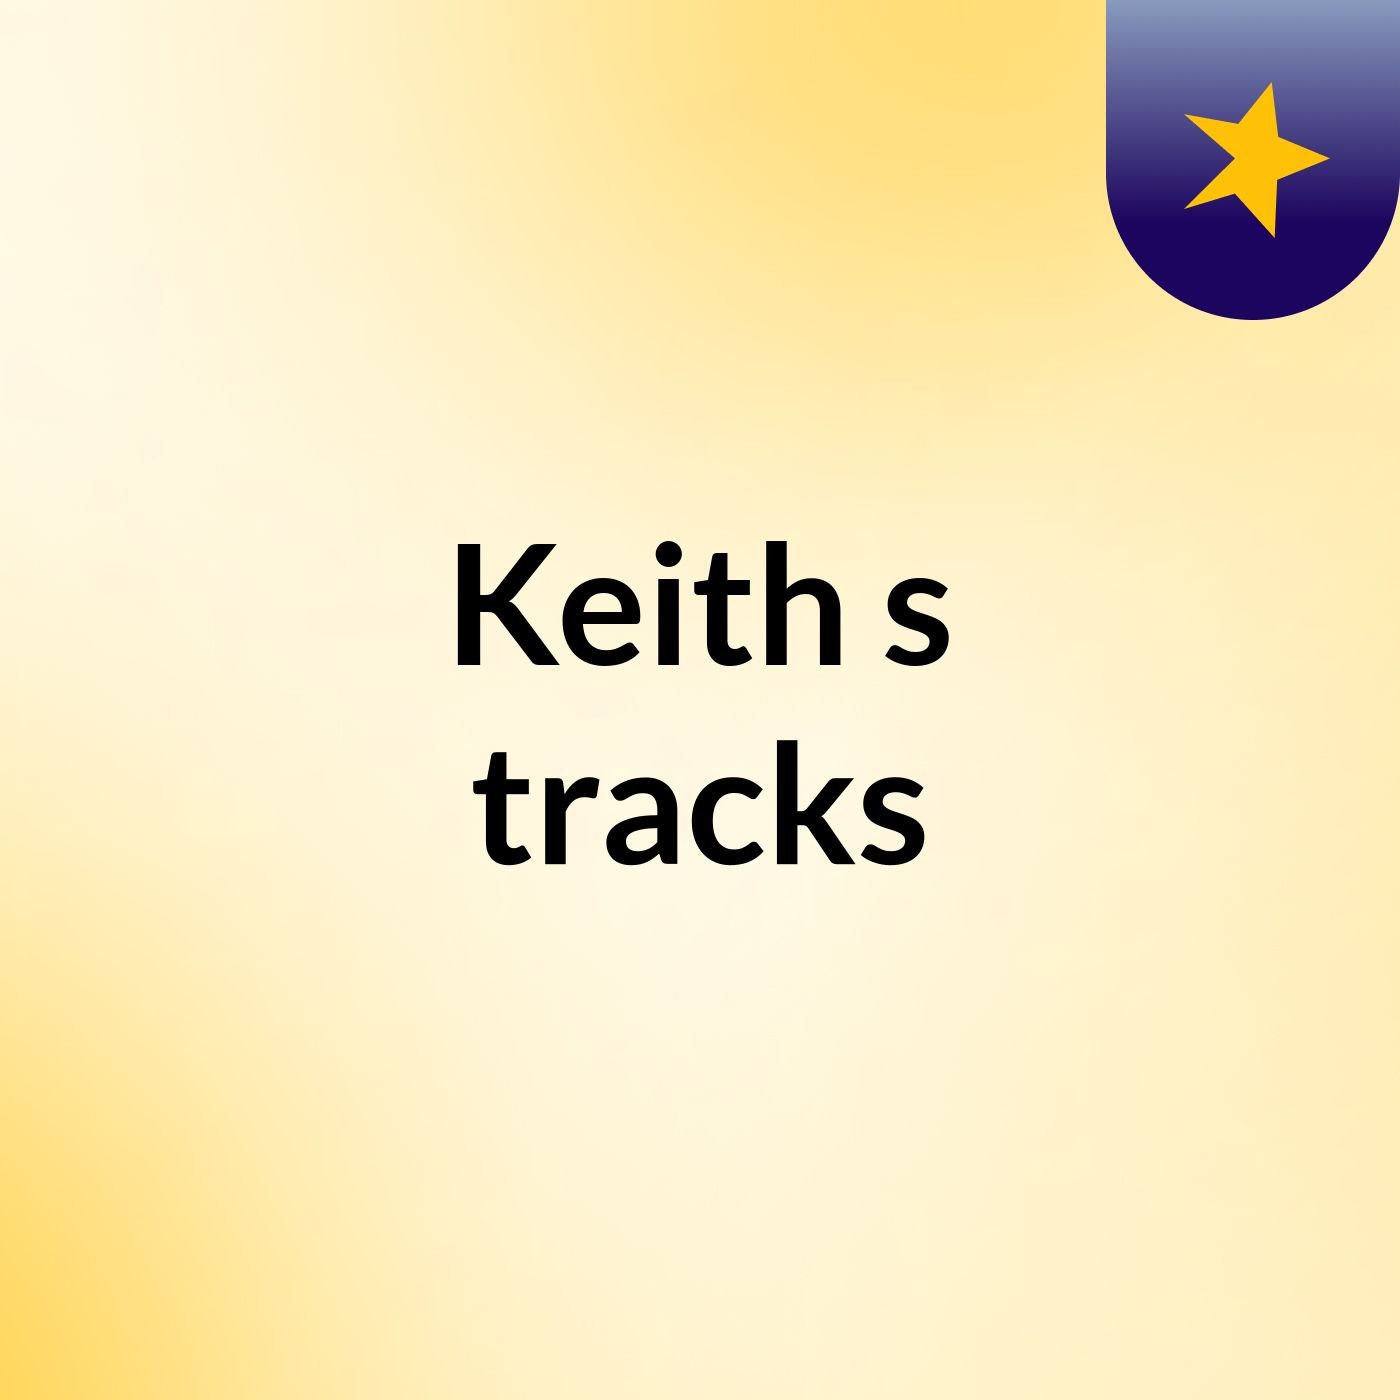 Keith's tracks